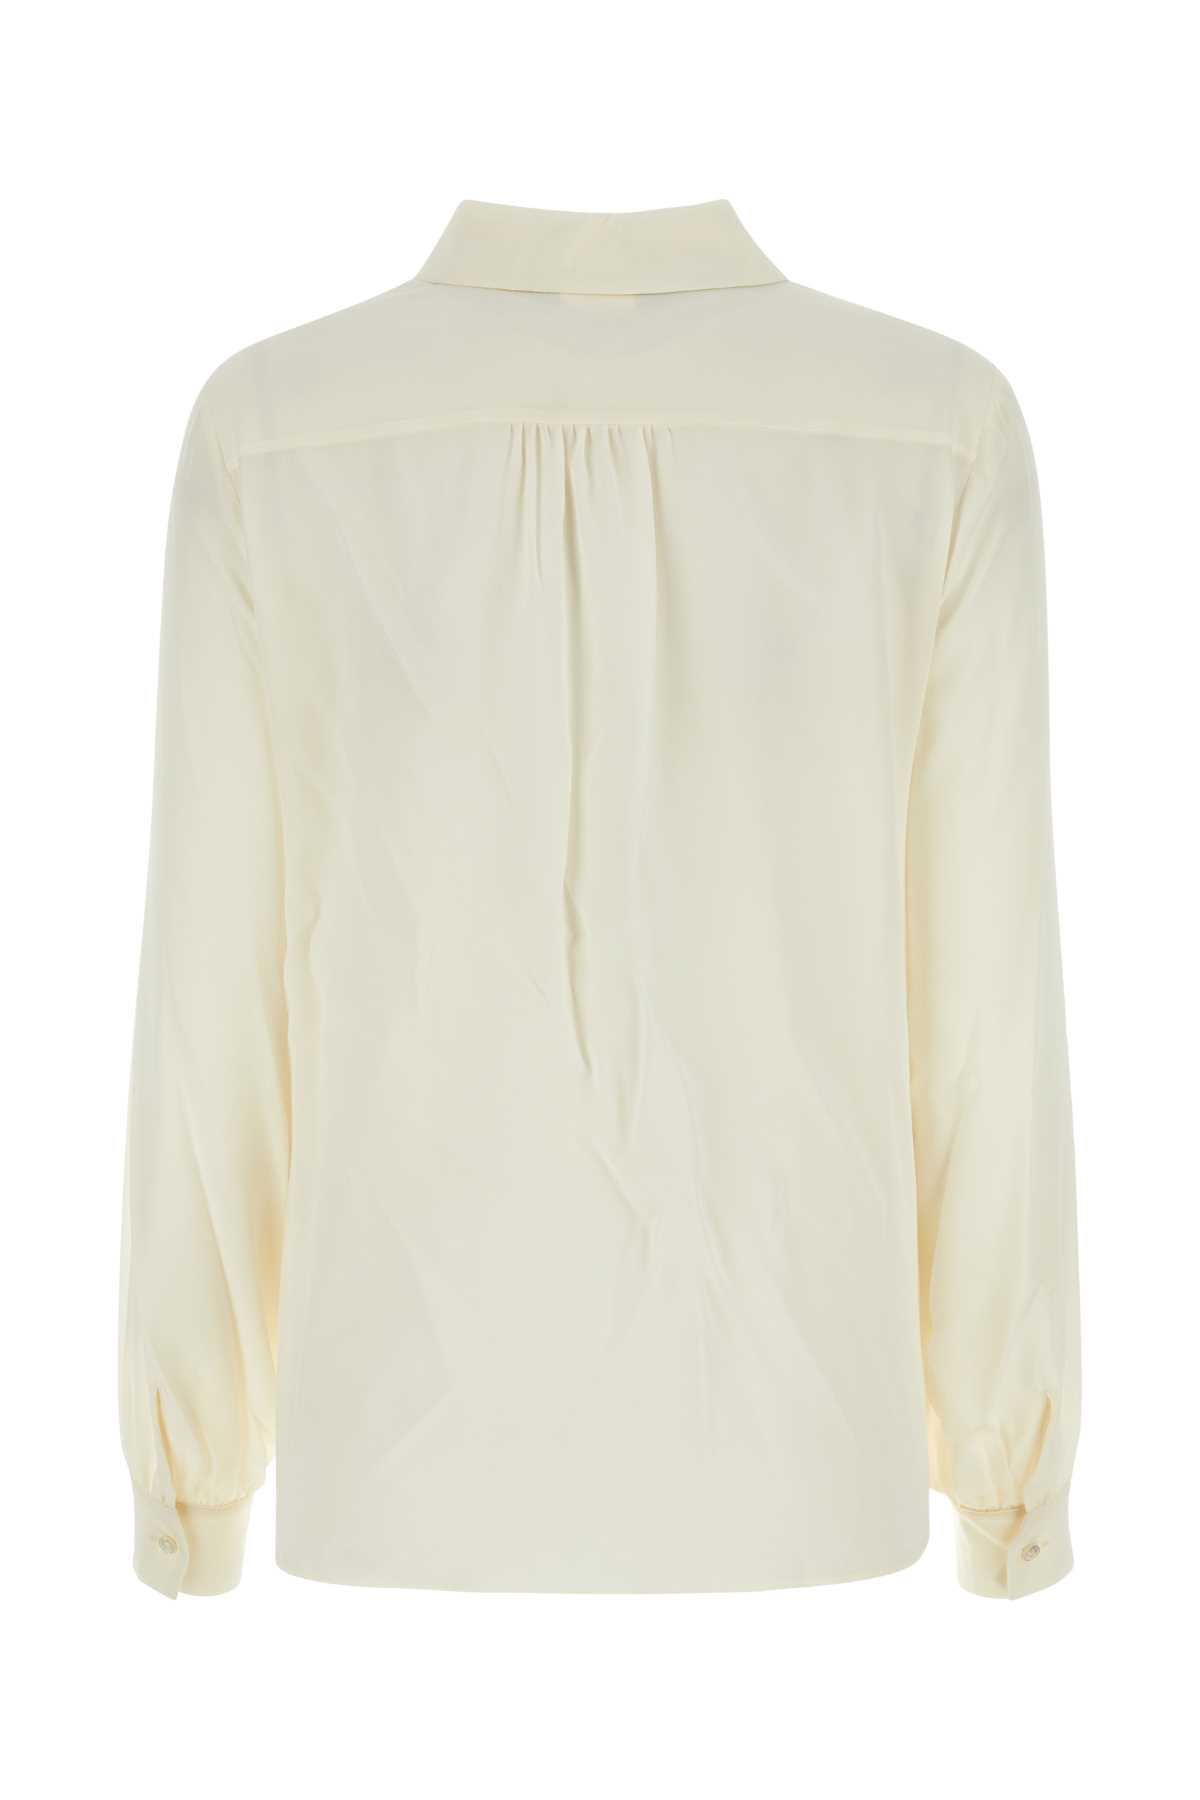 Weekend Max Mara White Silk Esopo Shirt In 001